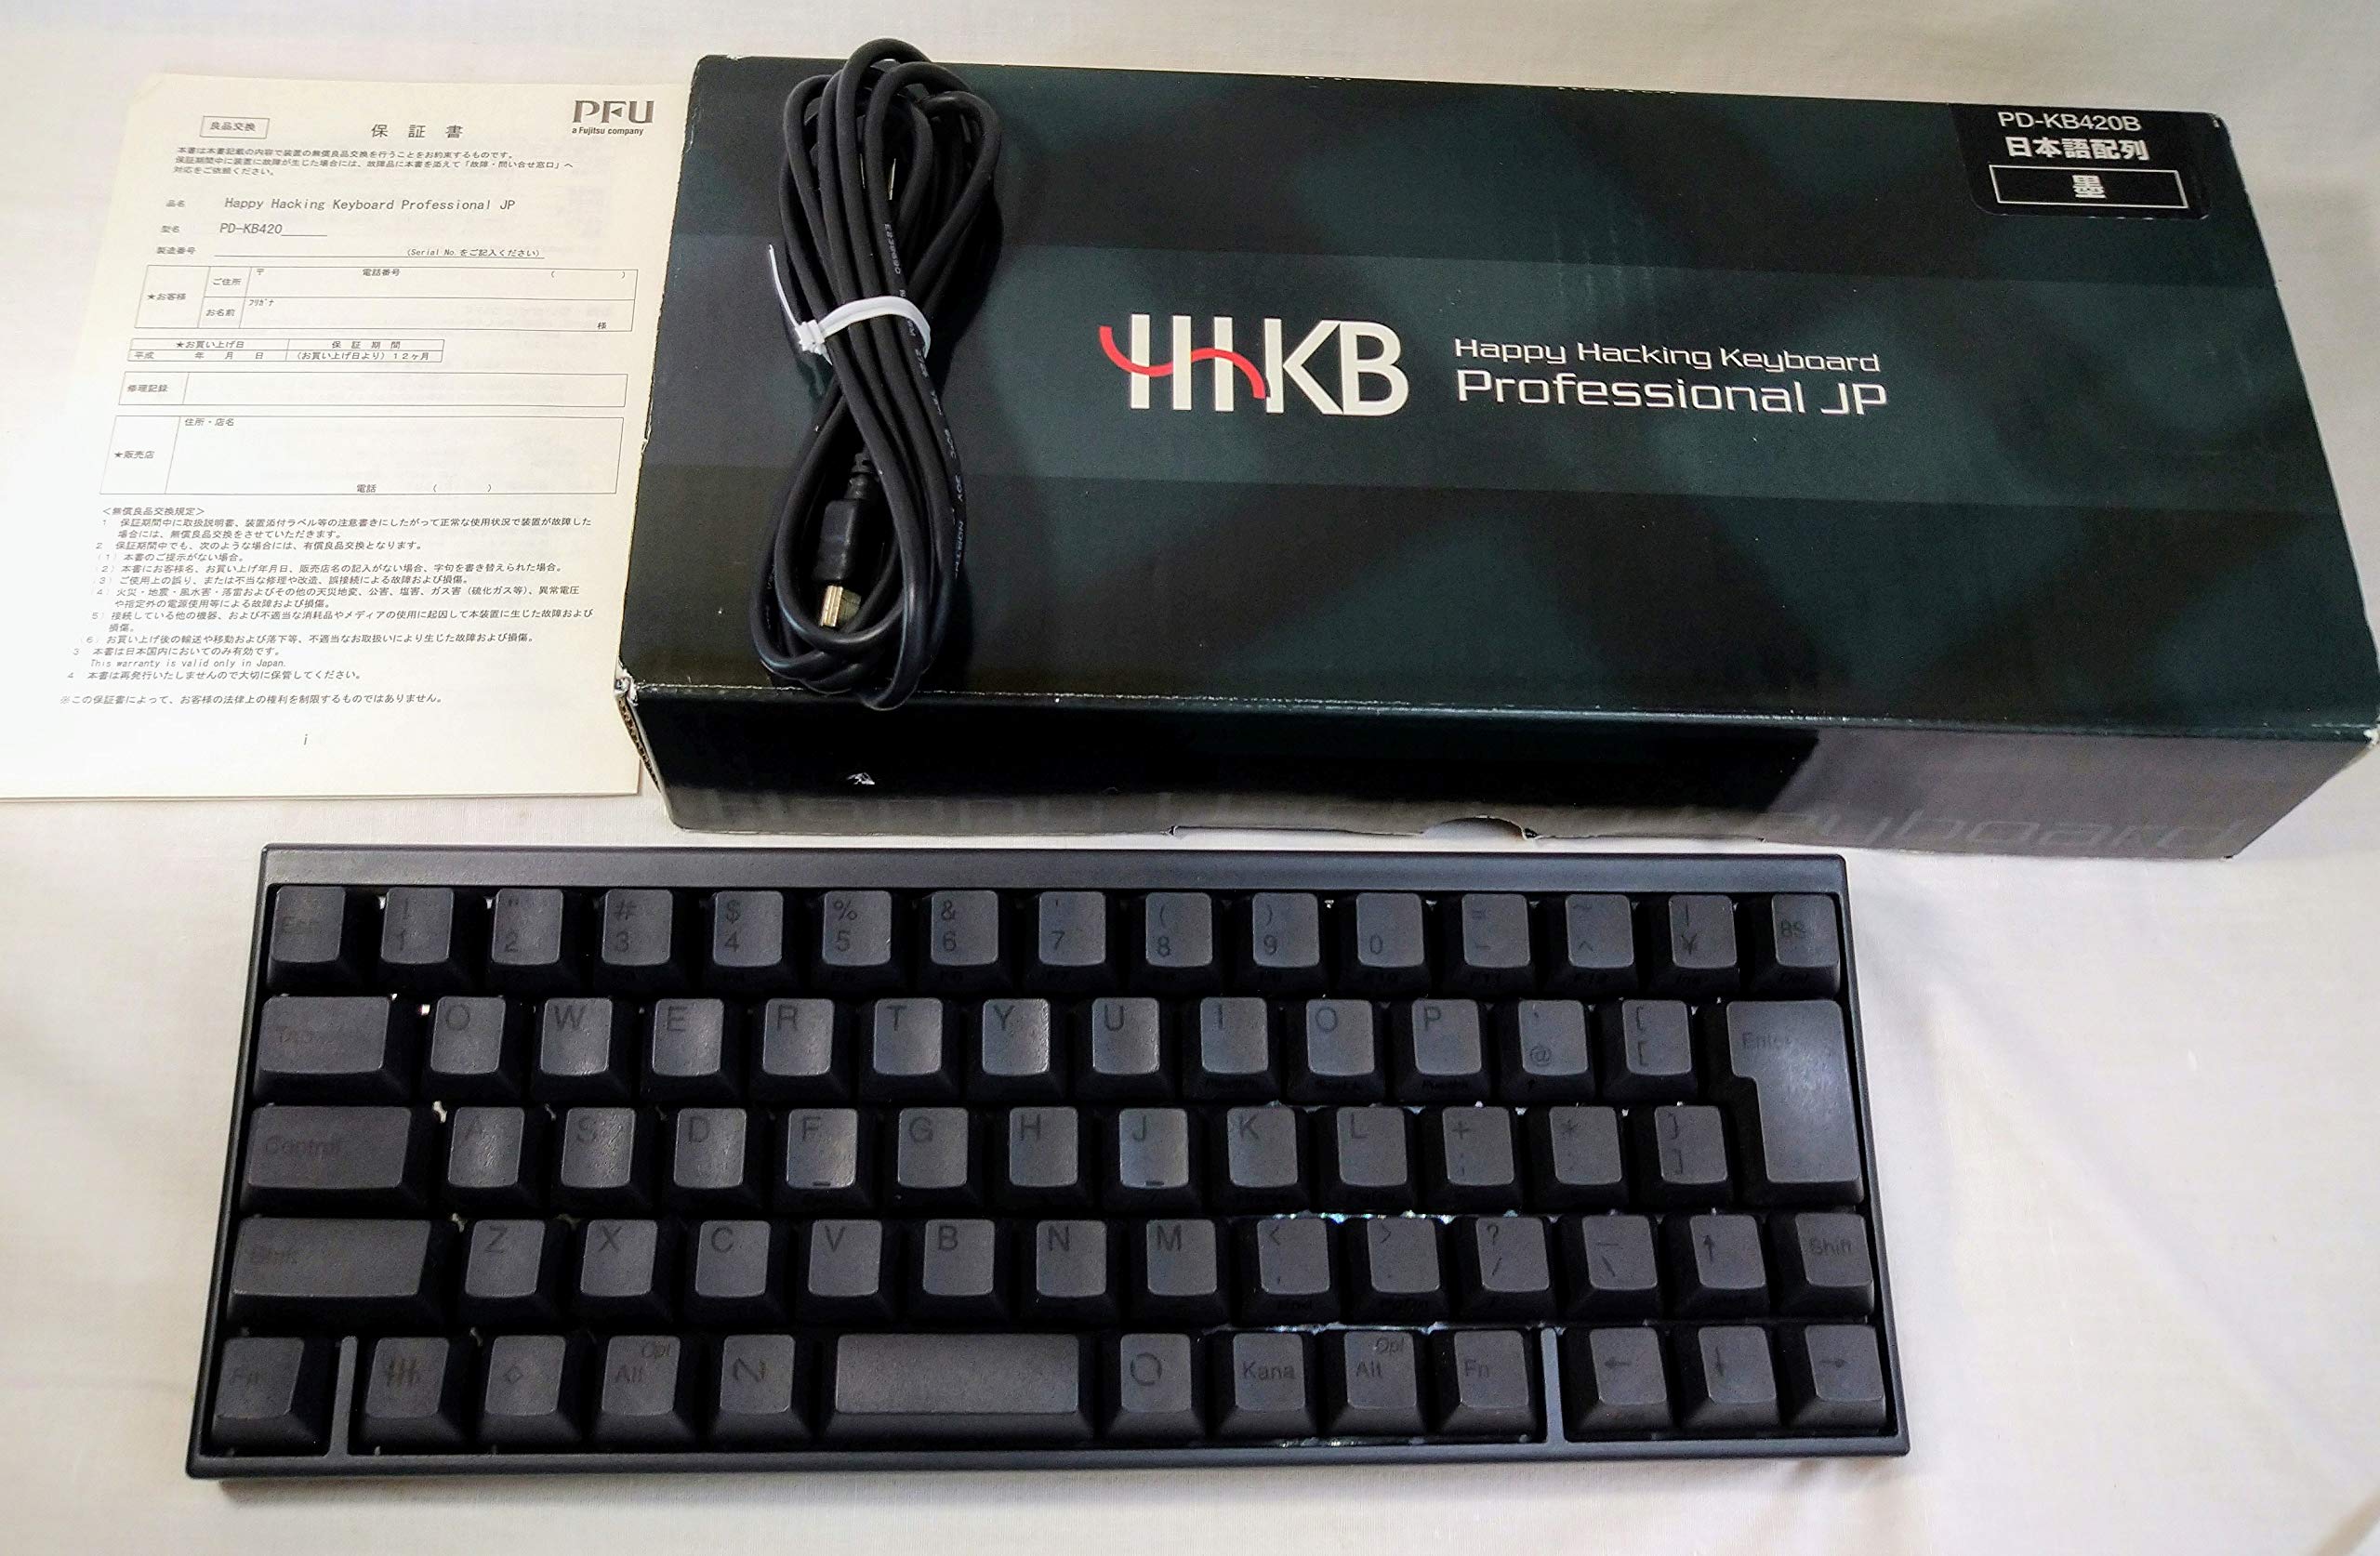 Happy Hacking Keyboard Professional JP.( японский язык расположение )